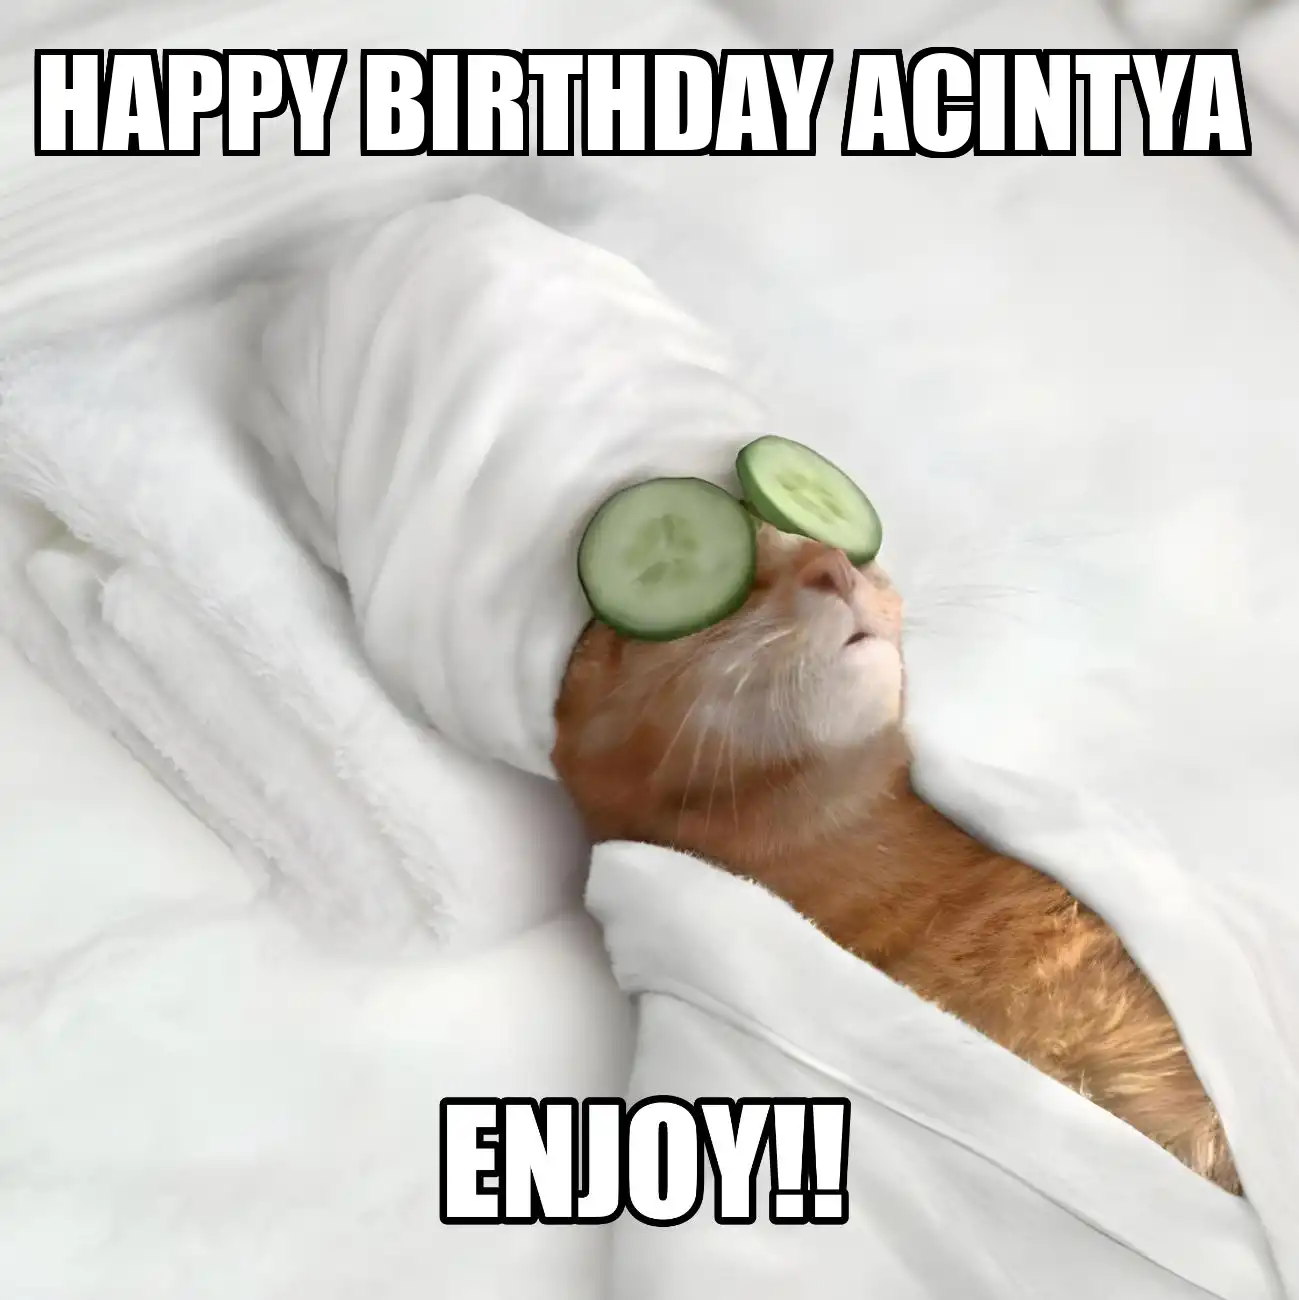 Happy Birthday Acintya Enjoy Cat Meme